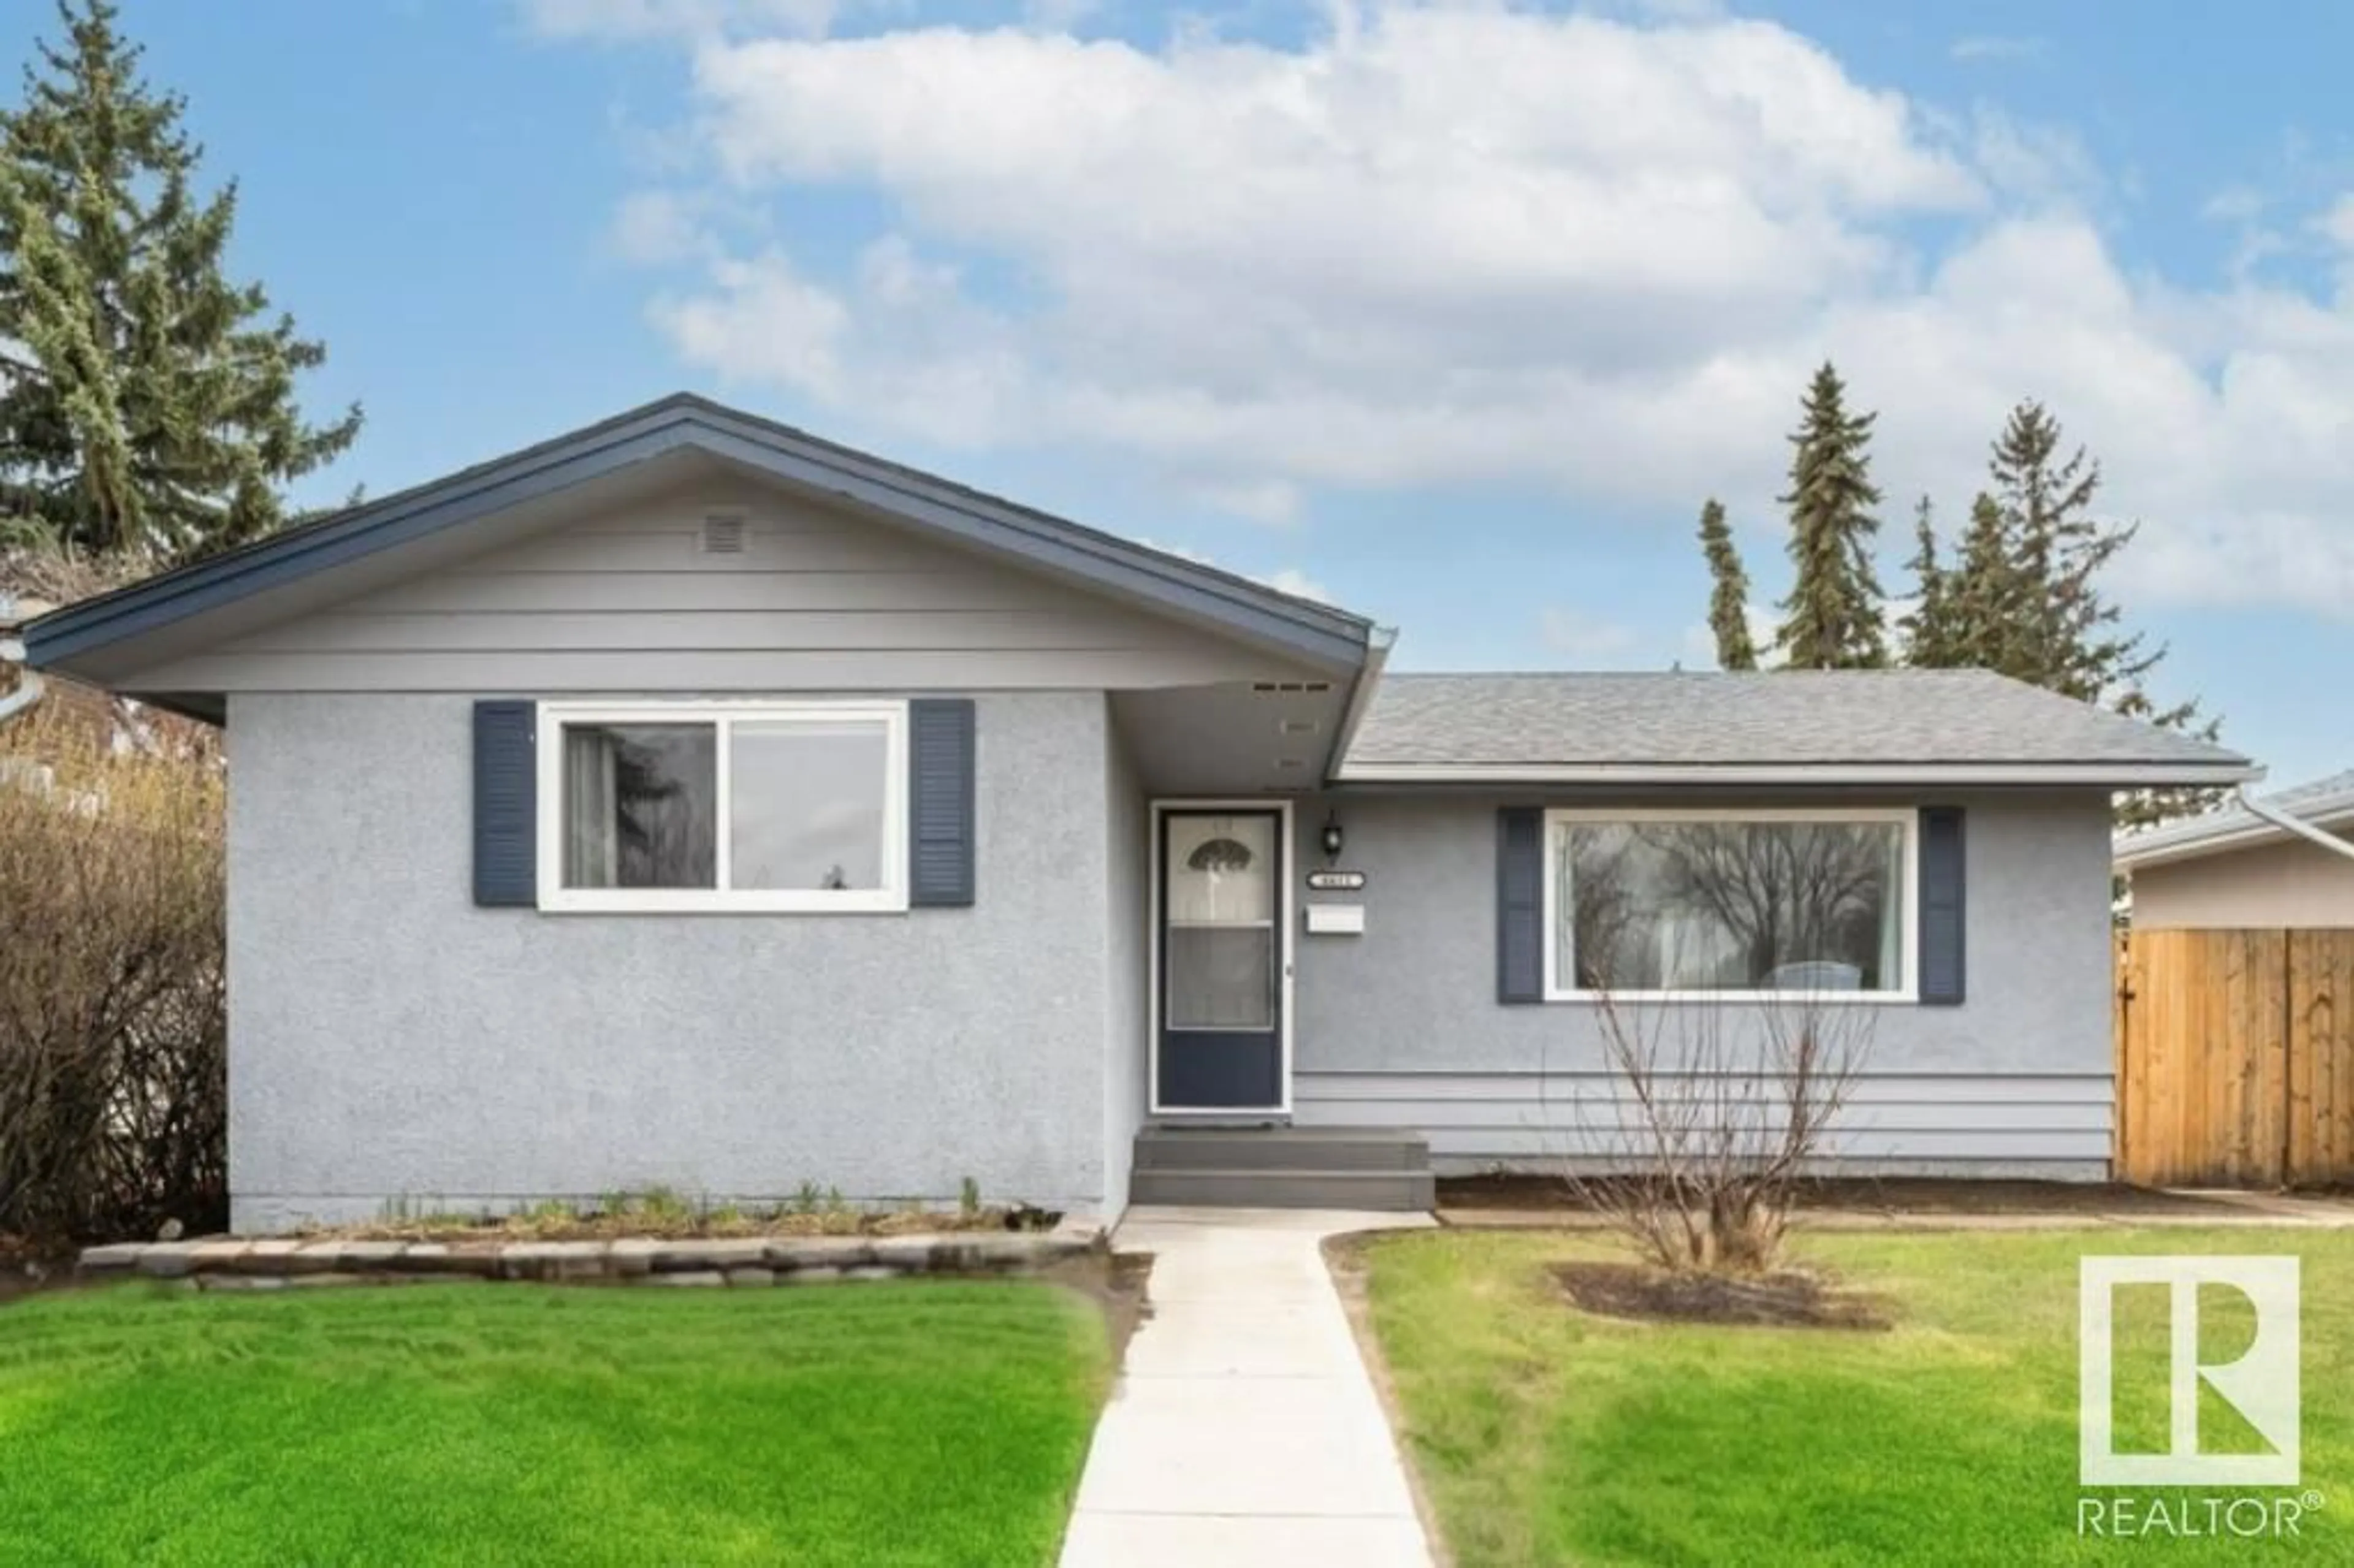 Home with vinyl exterior material for 6611 132A AV NW, Edmonton Alberta T5C2B5